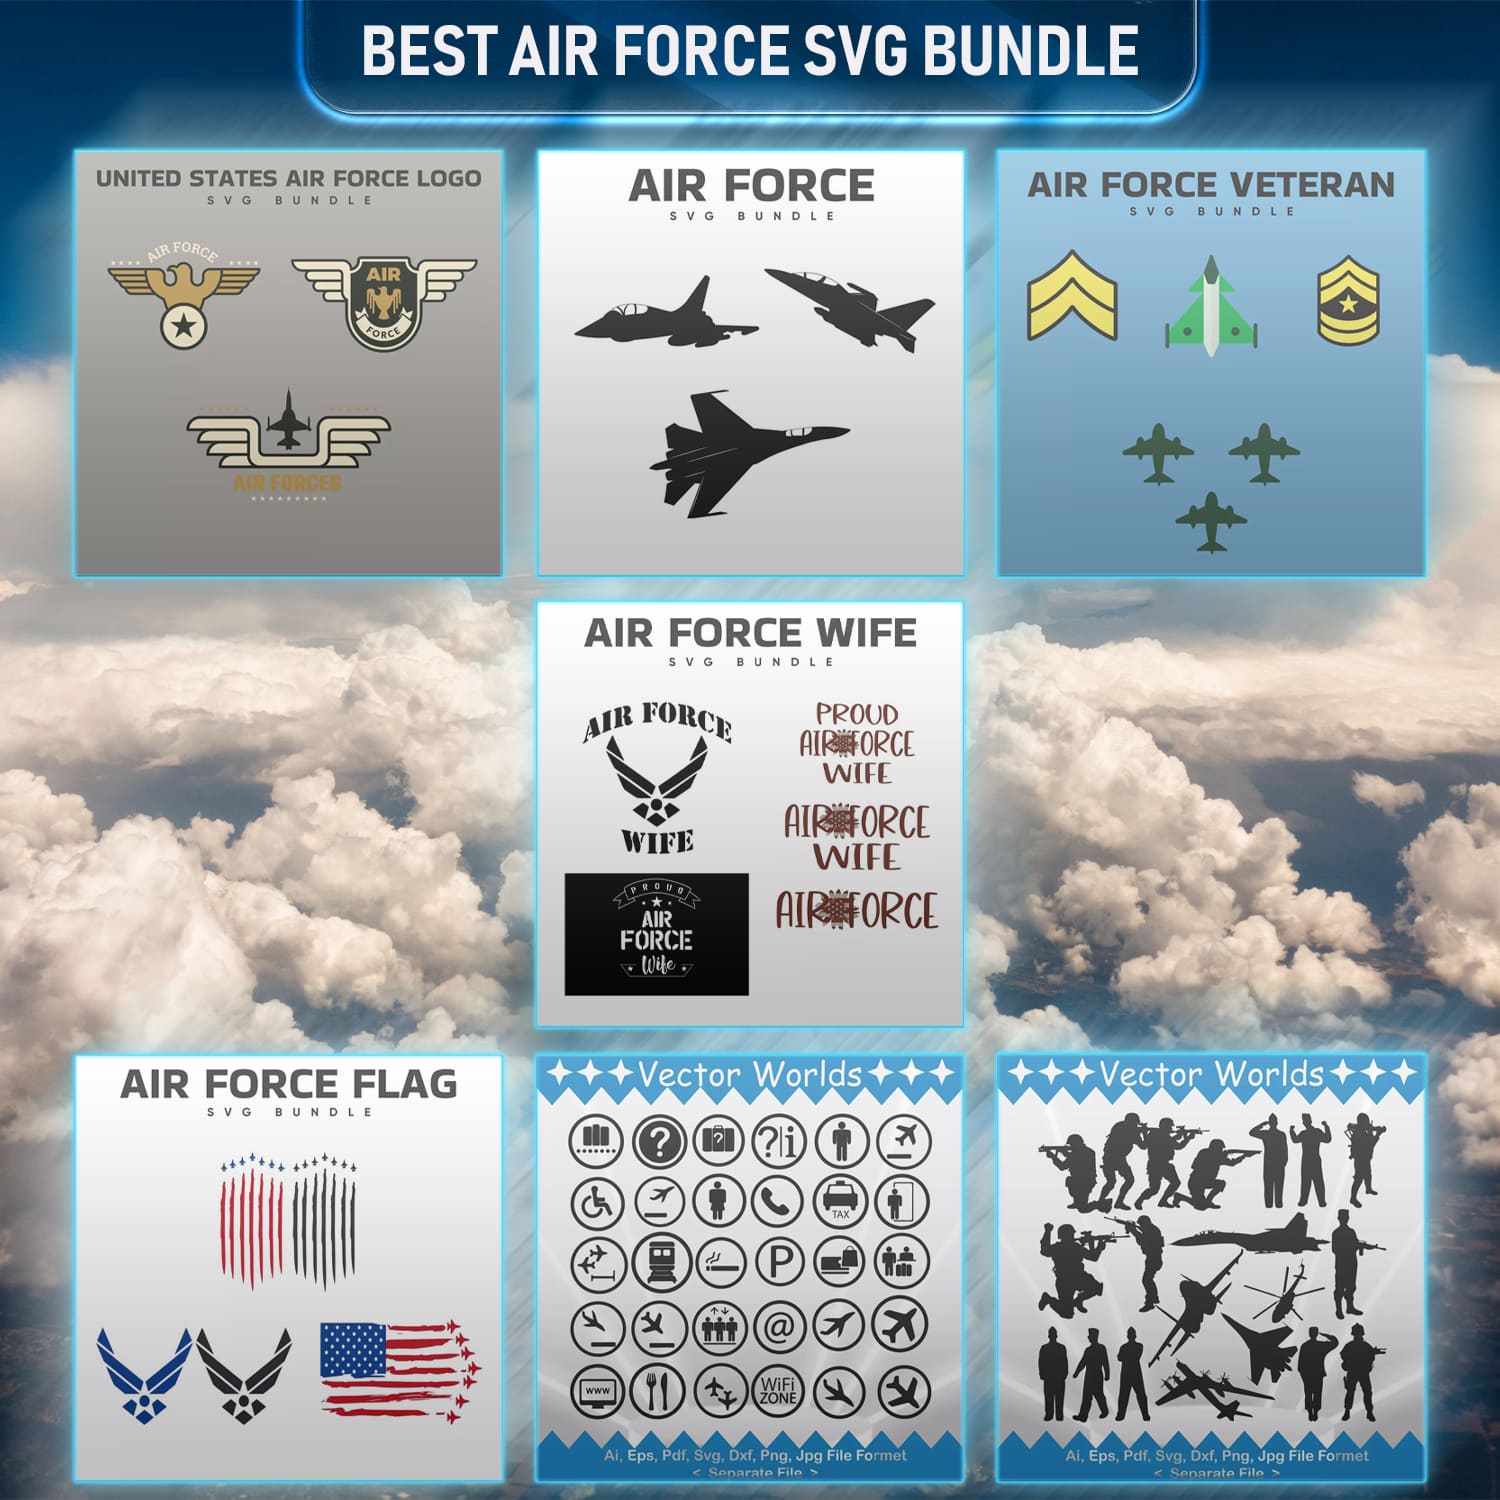 Best Air Force SVG Bundle cover image.